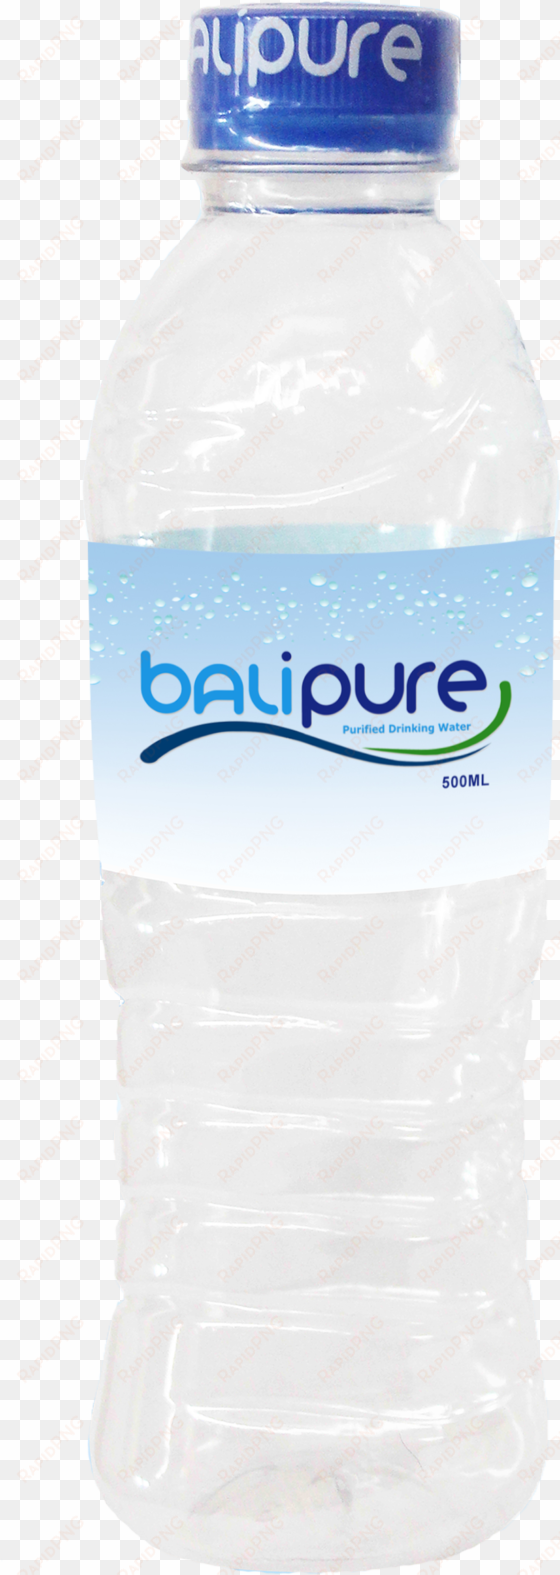 balipure bottle png - snowboard